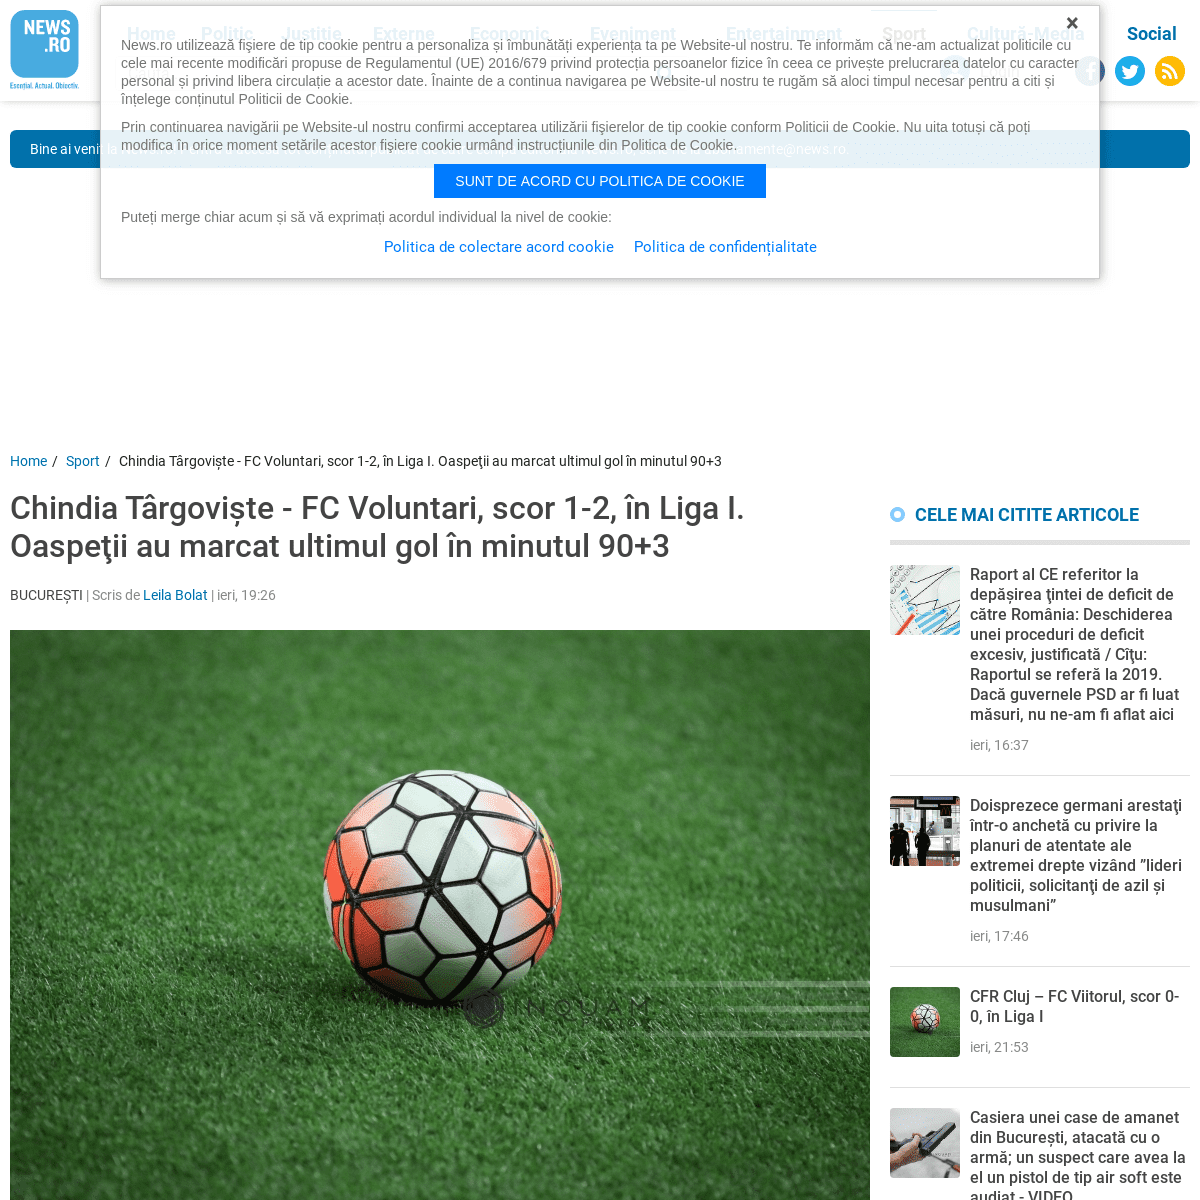 A complete backup of www.news.ro/sport/chindia-targoviste-fc-voluntari-scor-1-2-in-liga-i-oaspetii-au-marcat-ultimul-gol-in-minu